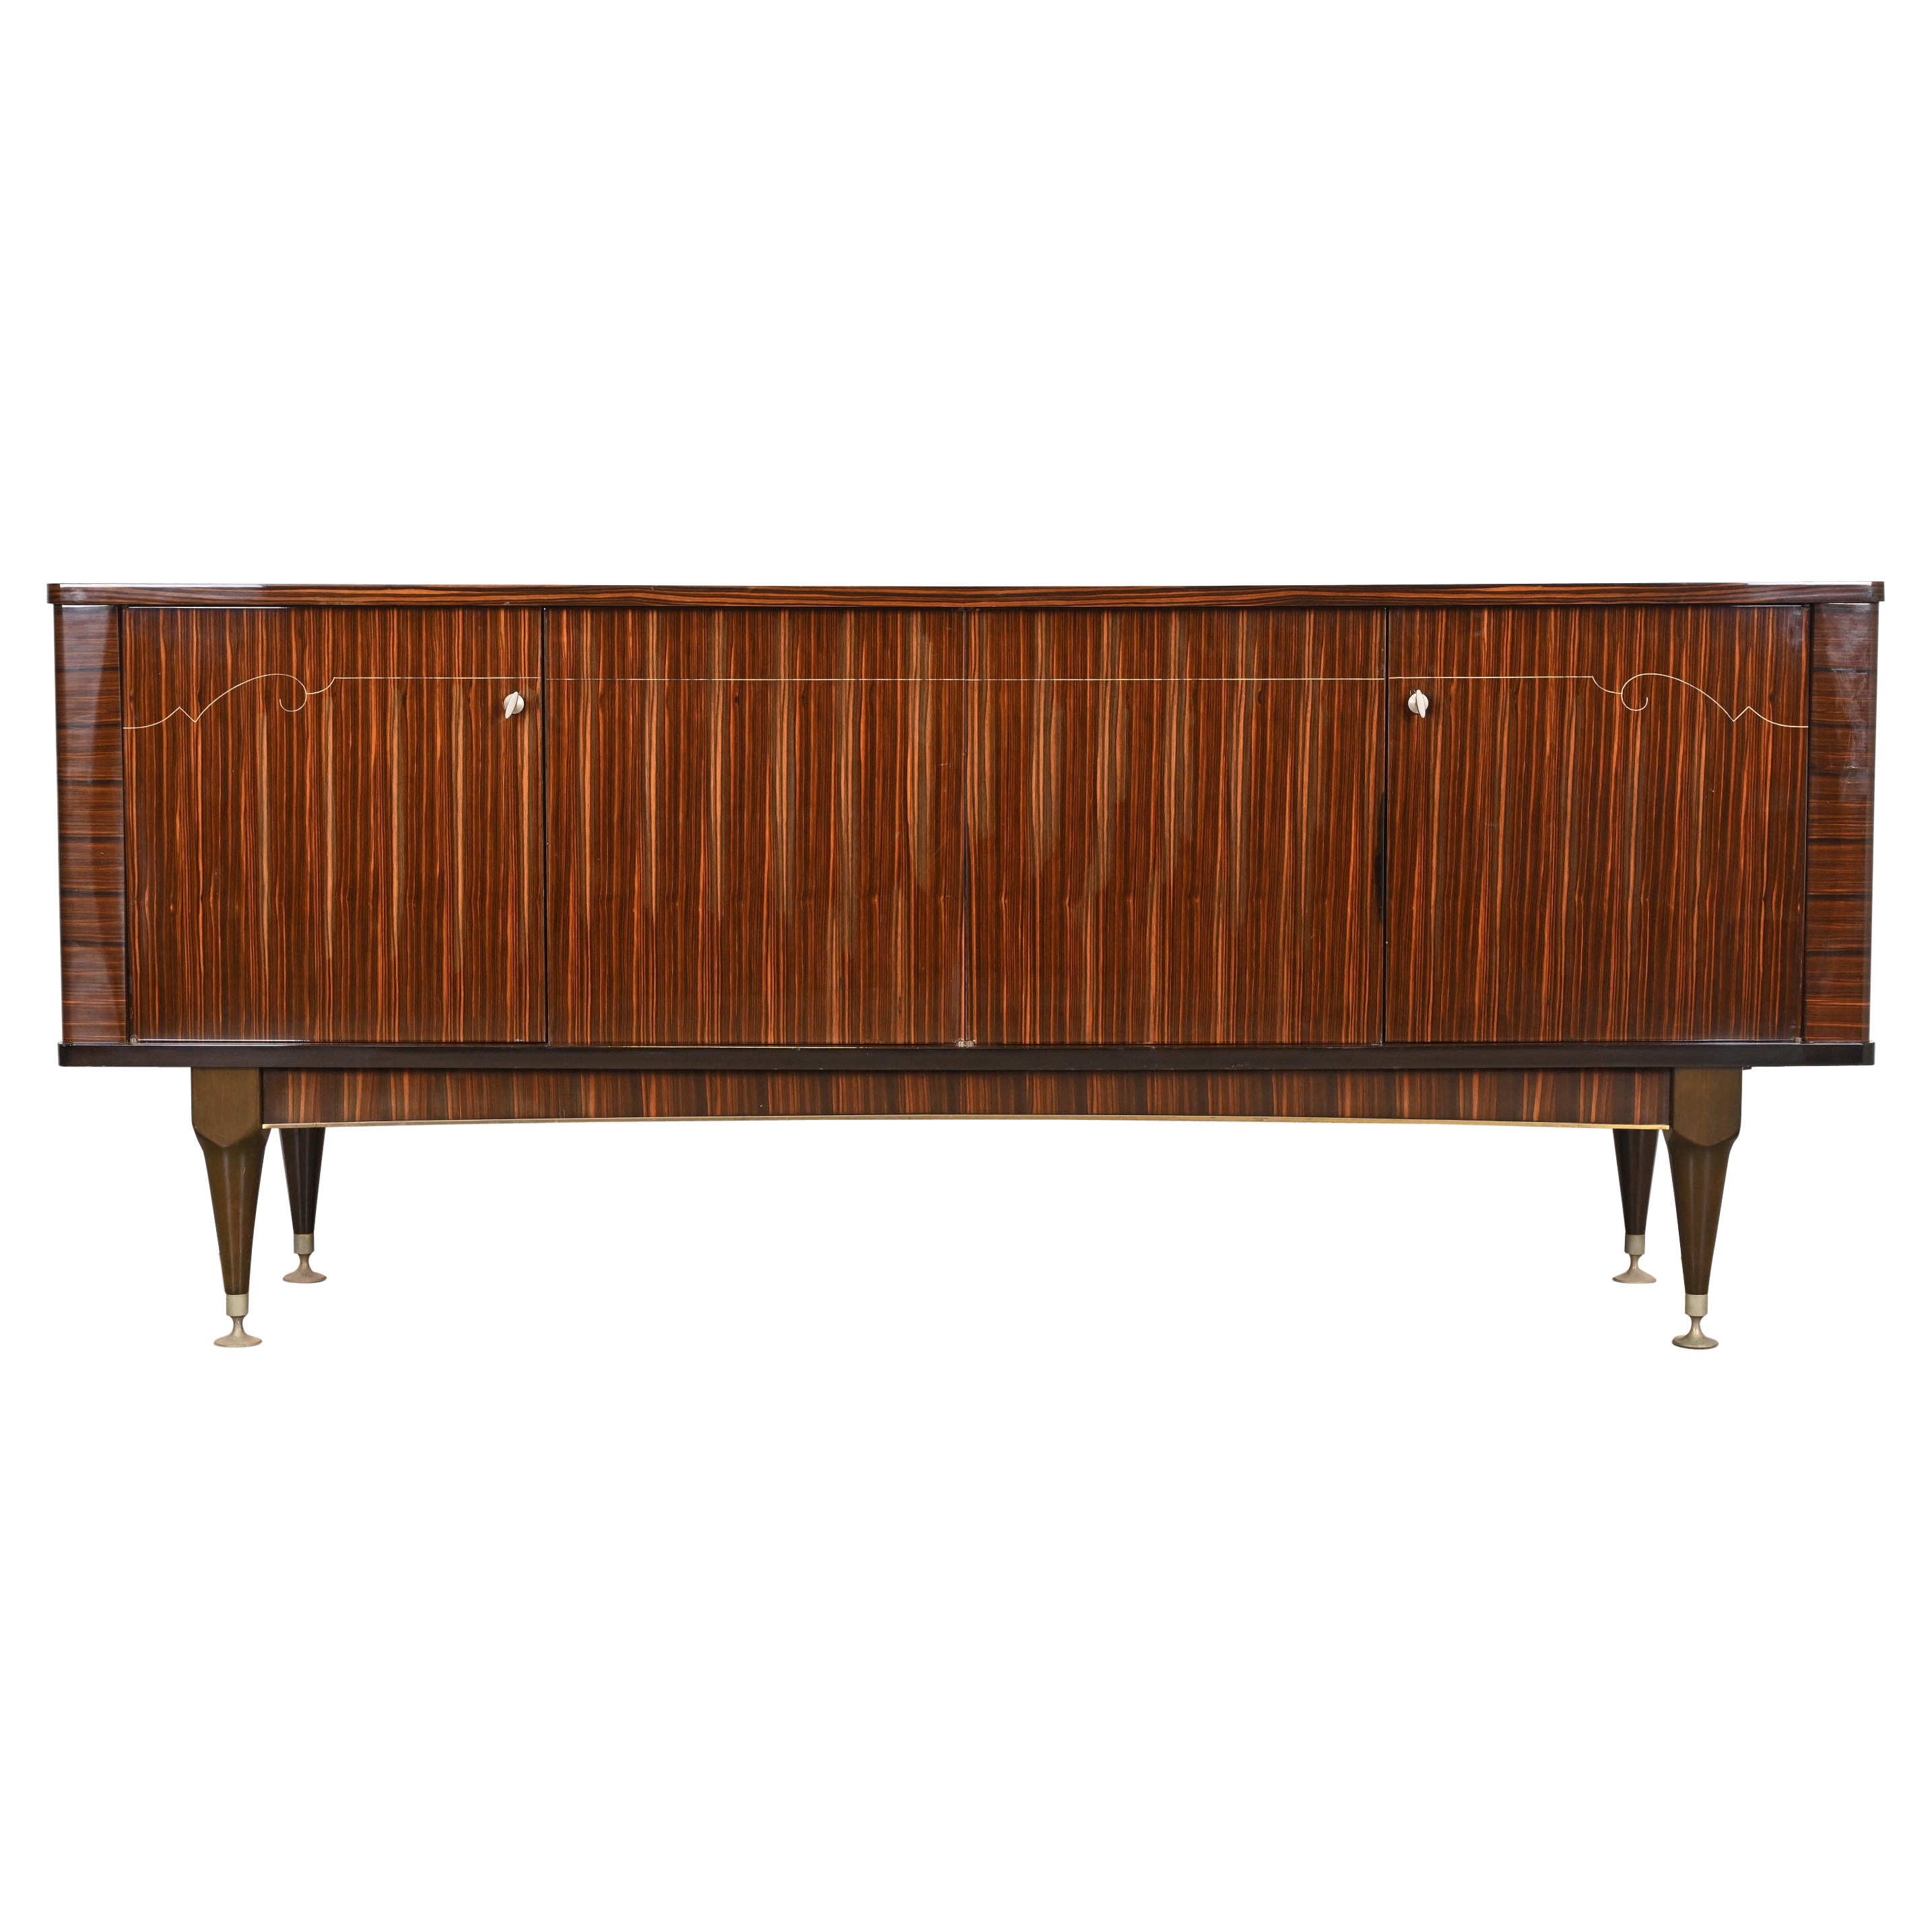 French Art Deco Macassar Ebony Sideboard or Bar Cabinet by N.F. Ameublement